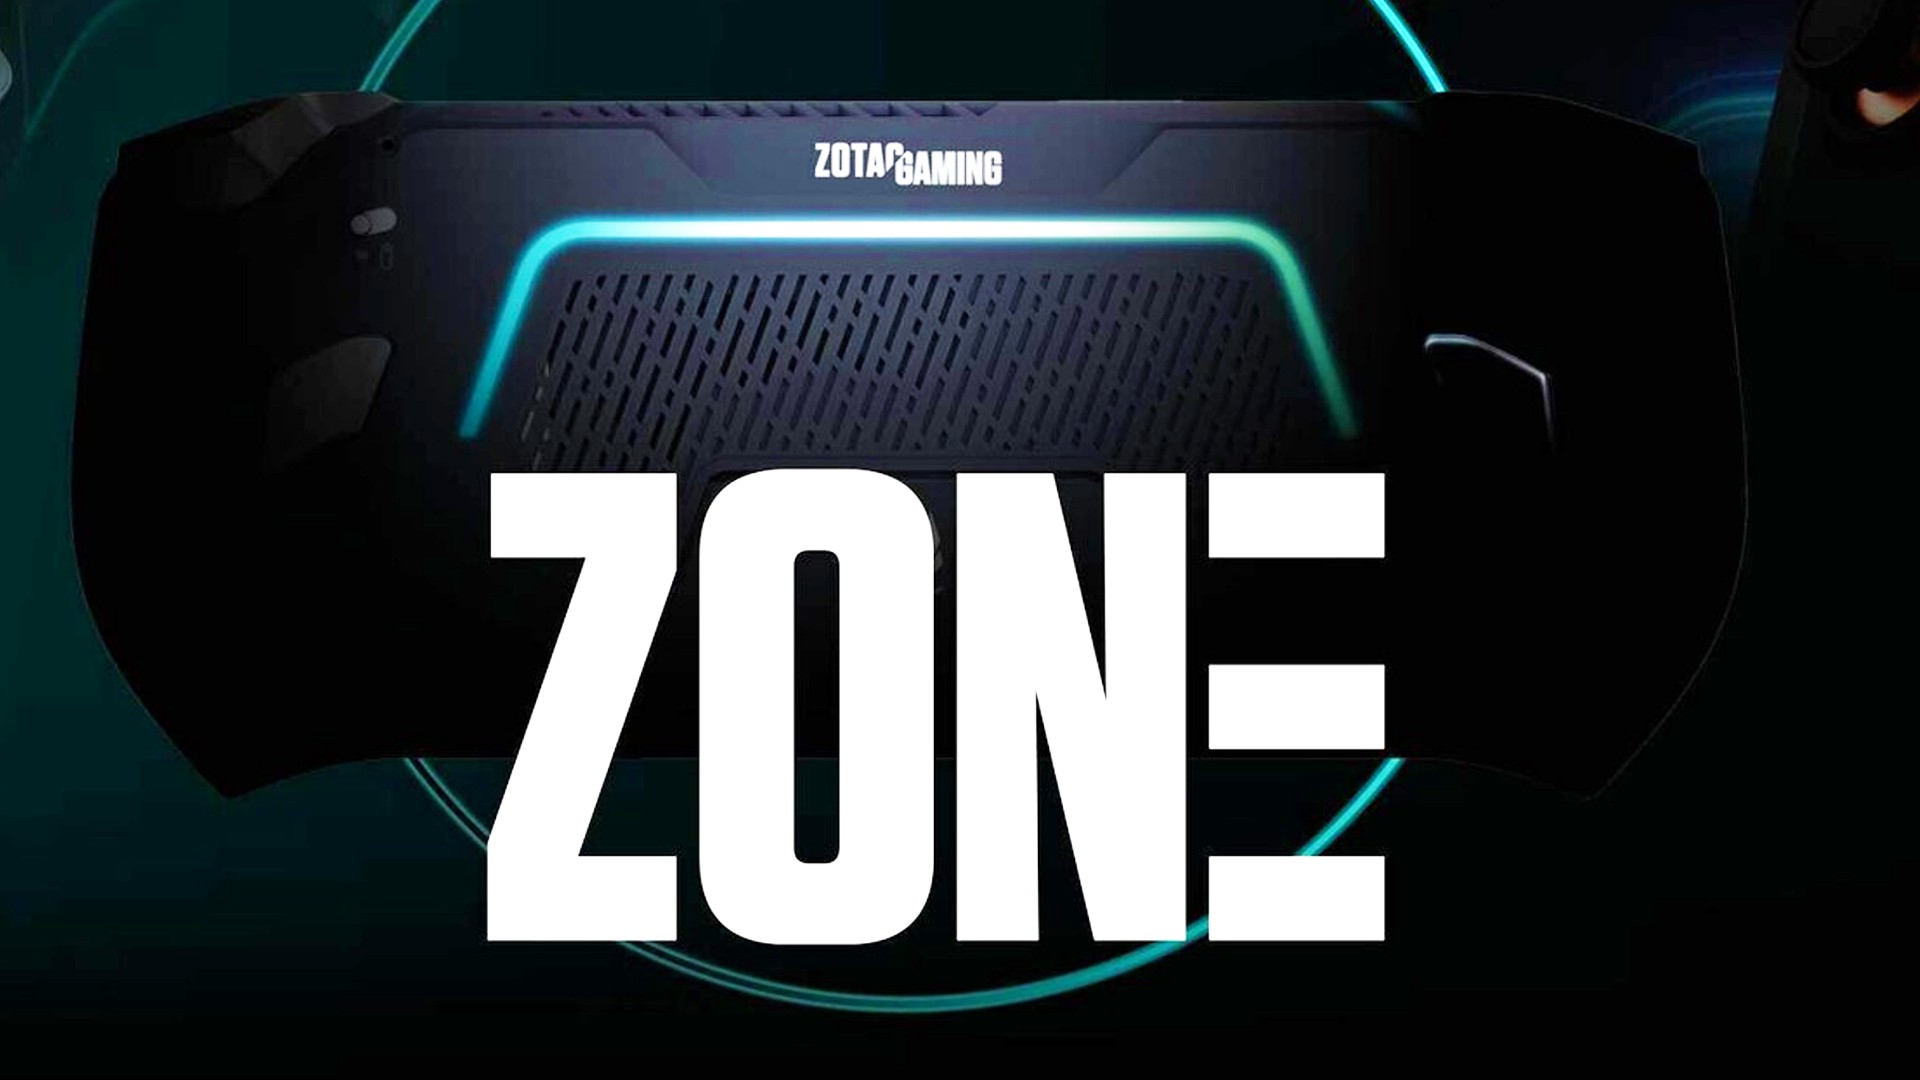 Zotac Zone specs leak, and they're pretty impressive